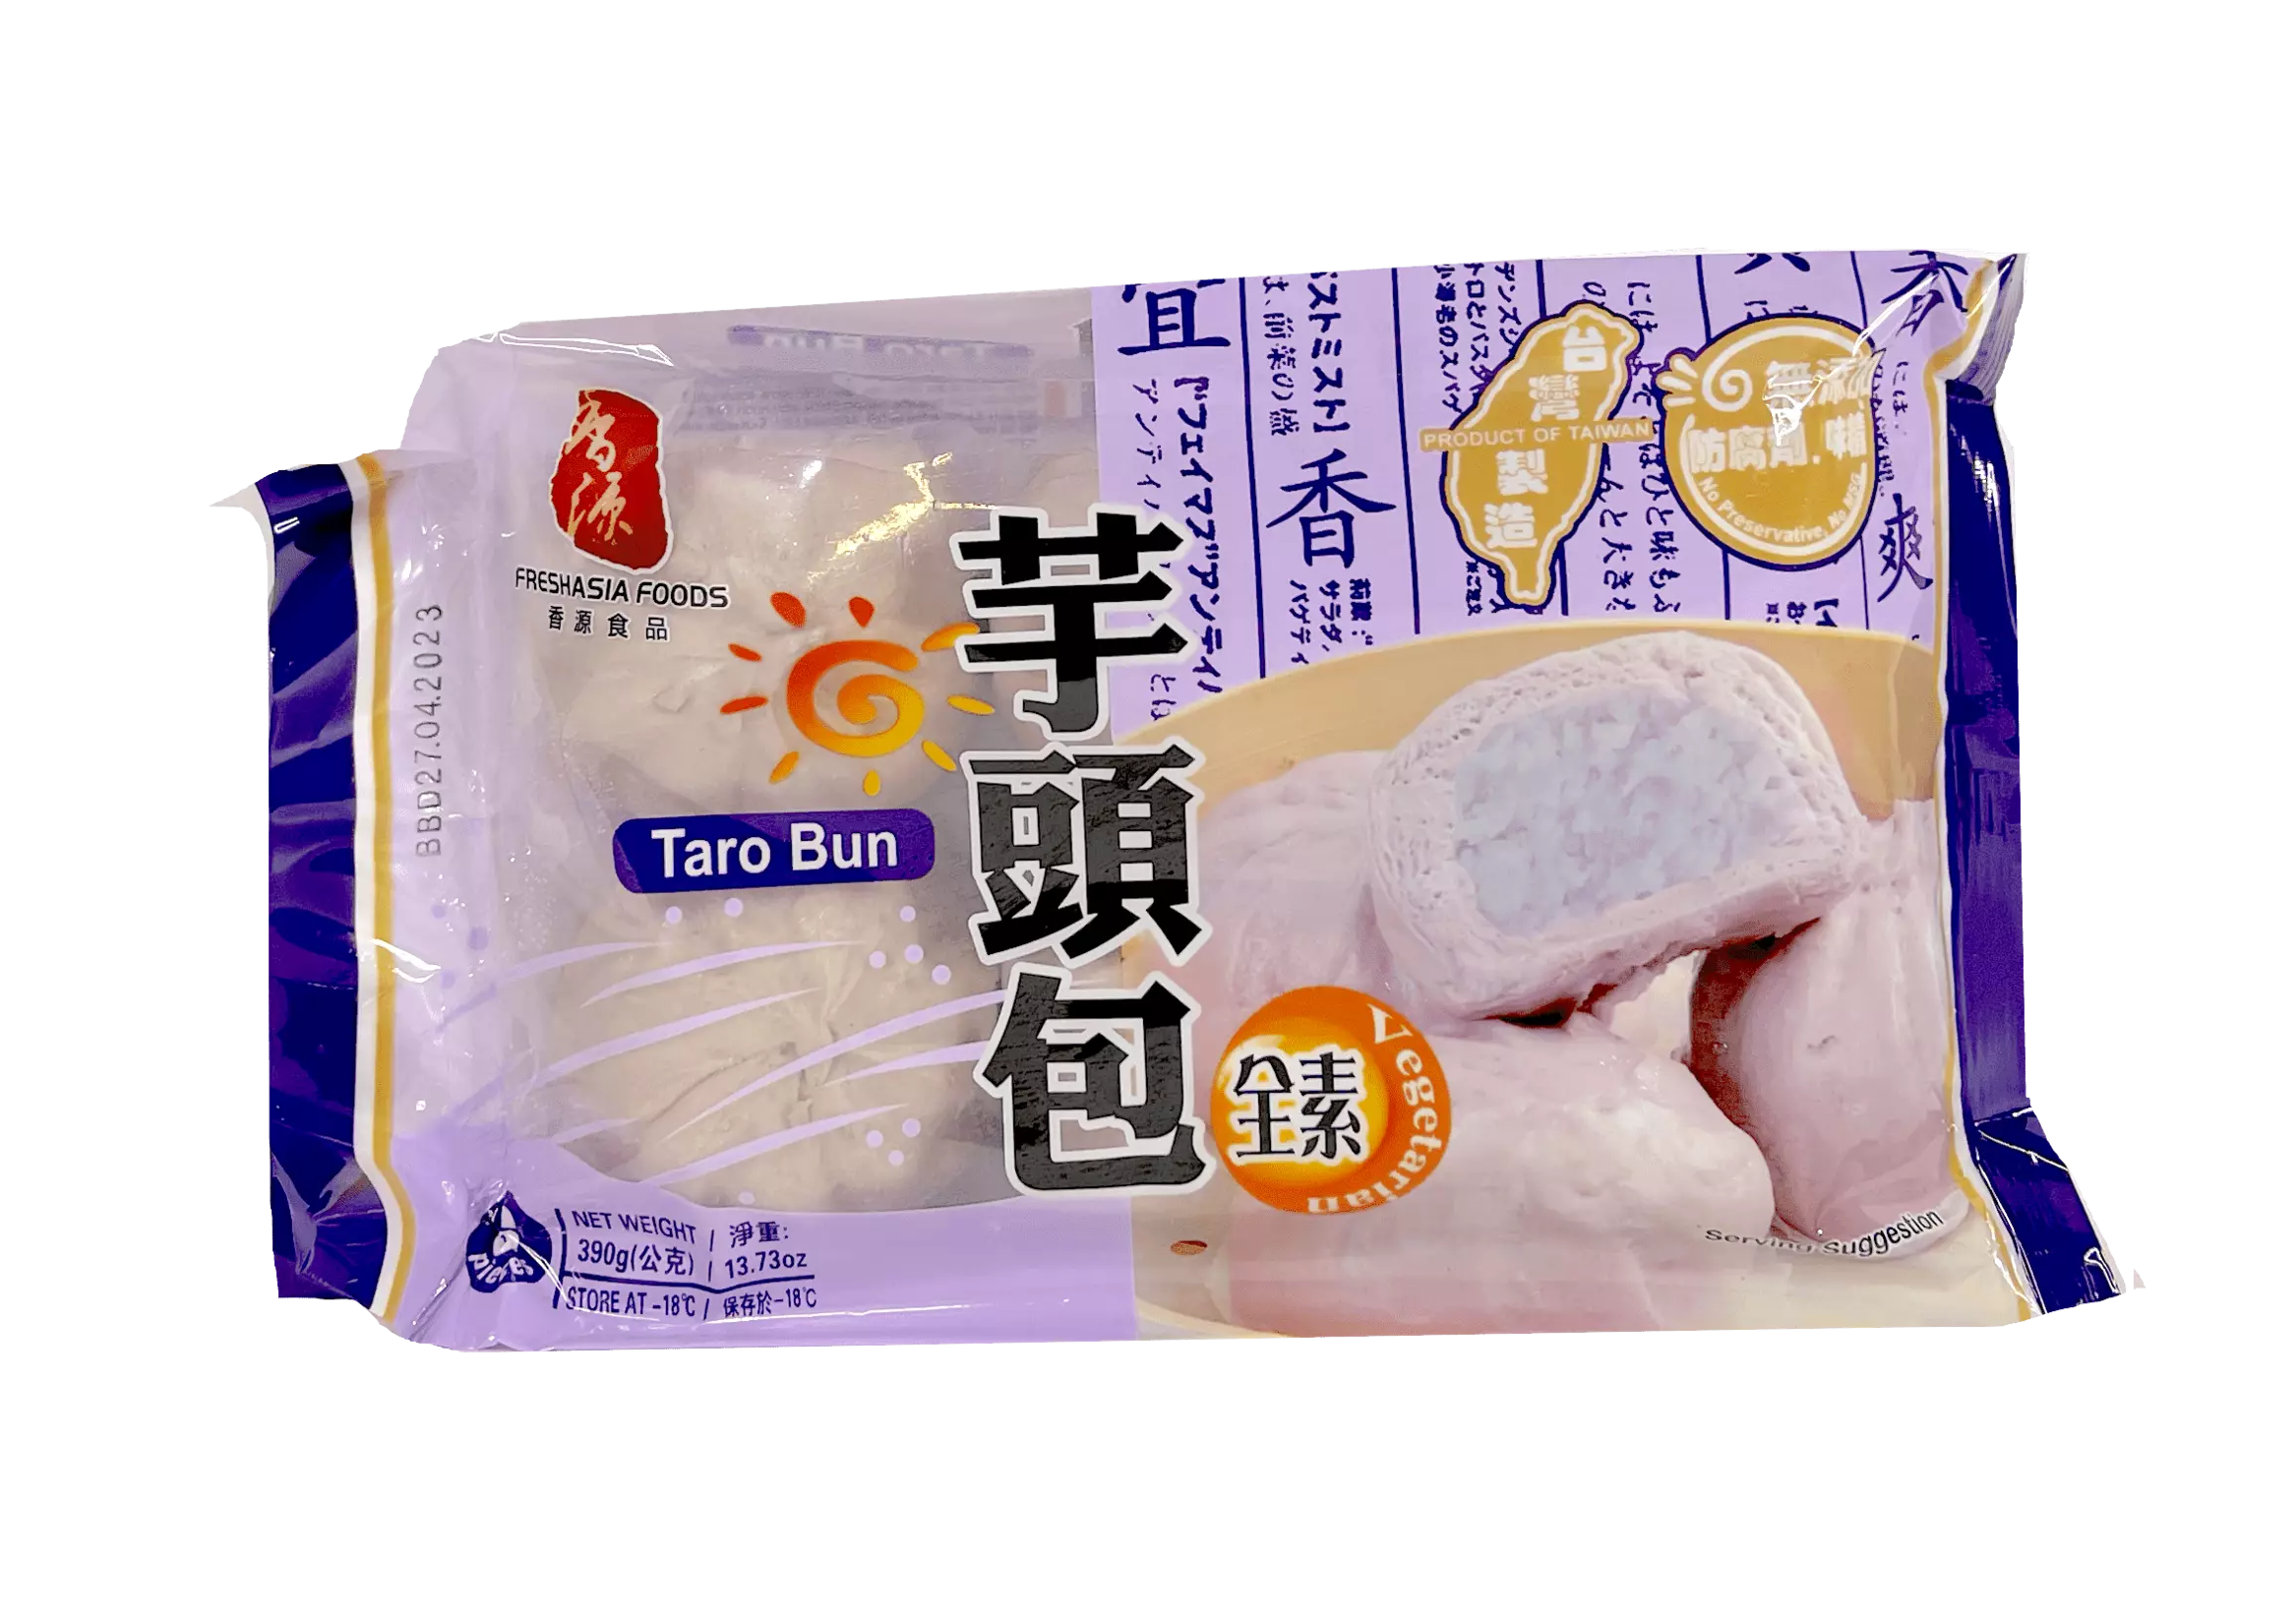 Vegan Steamed Bao Filled With Taro Pasta 390g Freshasia